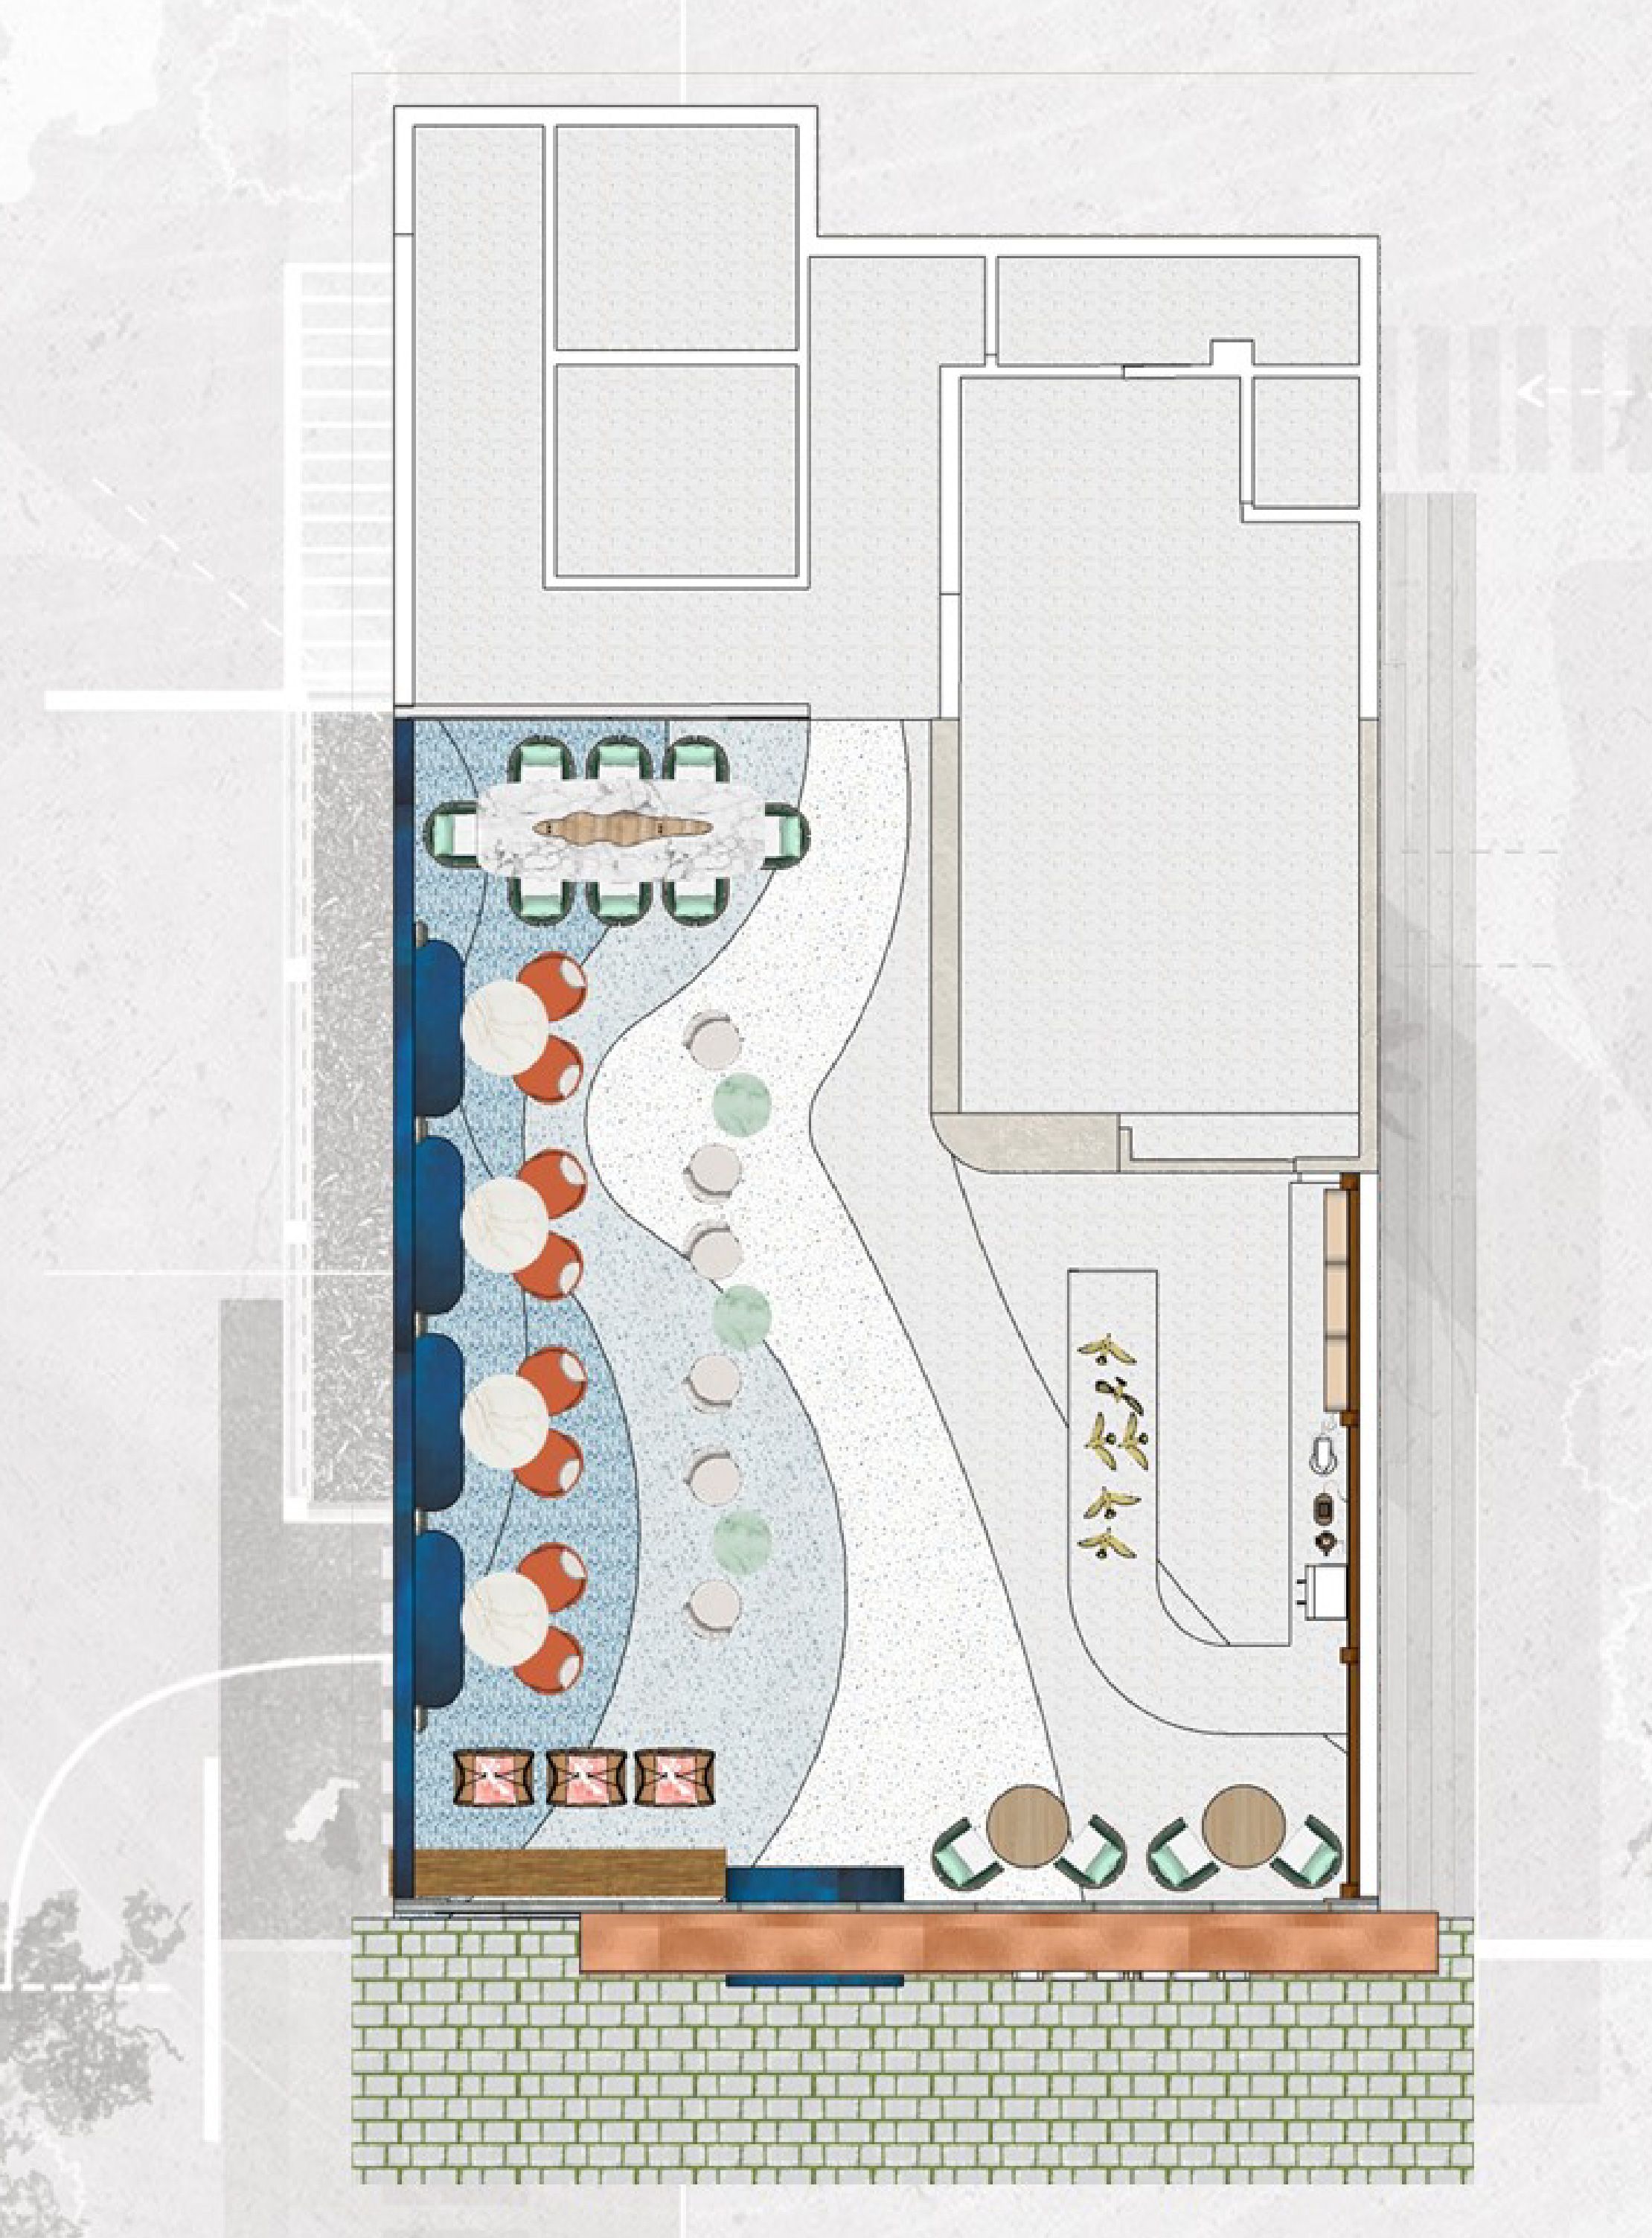 Coast Cafe Concept Site Plan - Arpita Muley